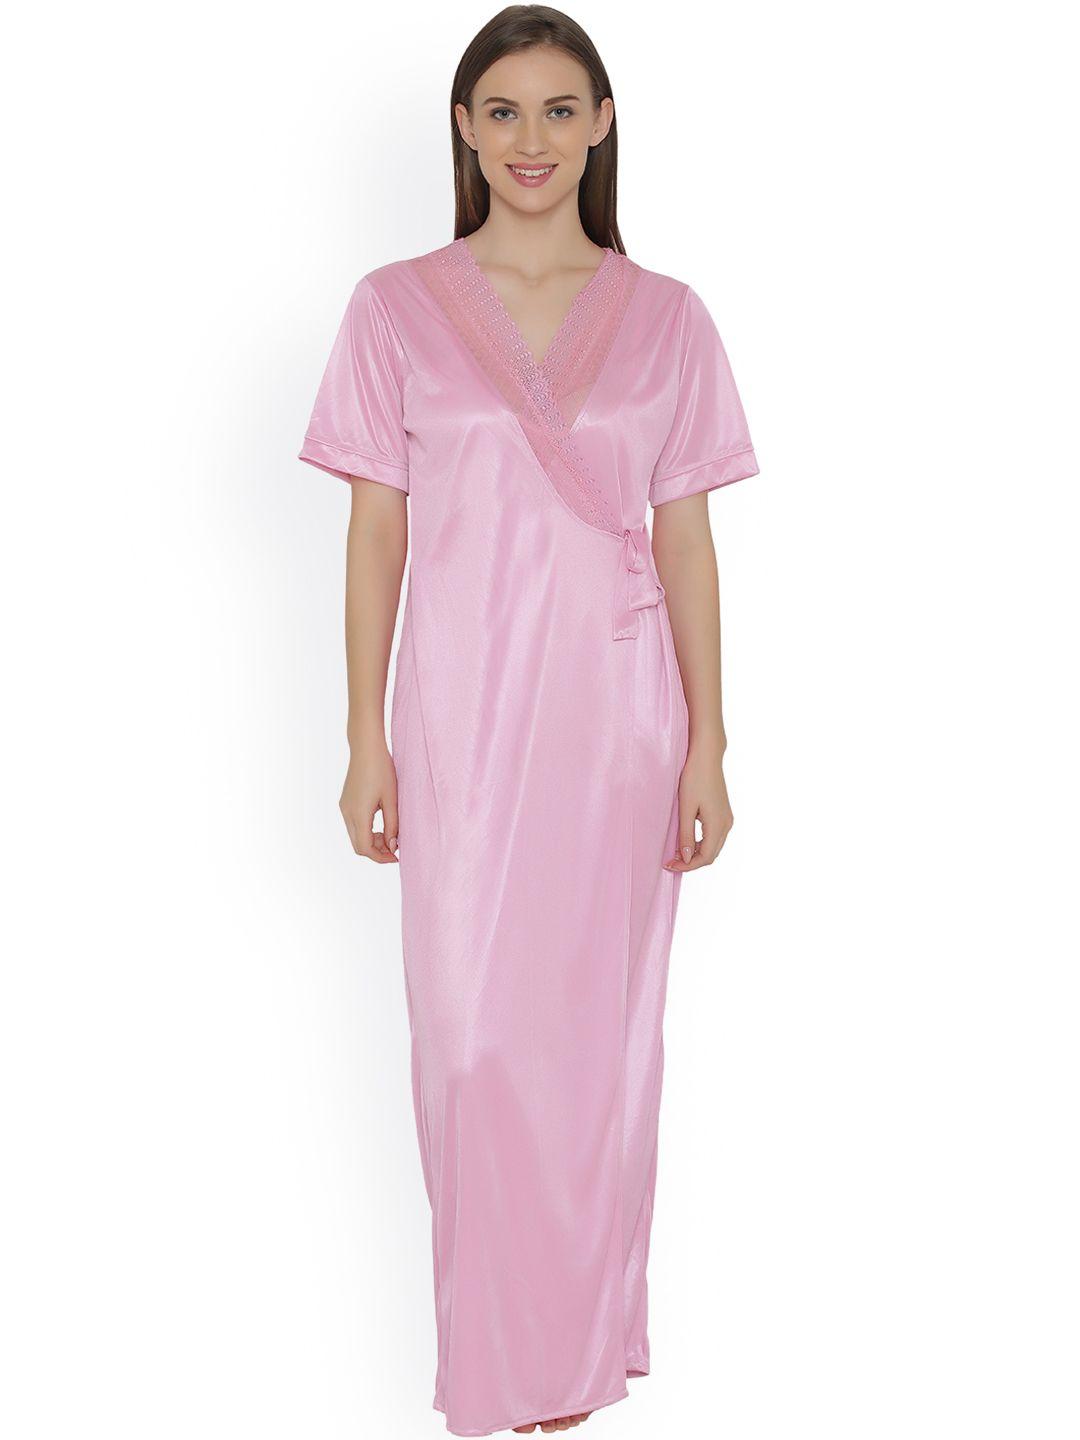 clovia women pink robe nsm283p62